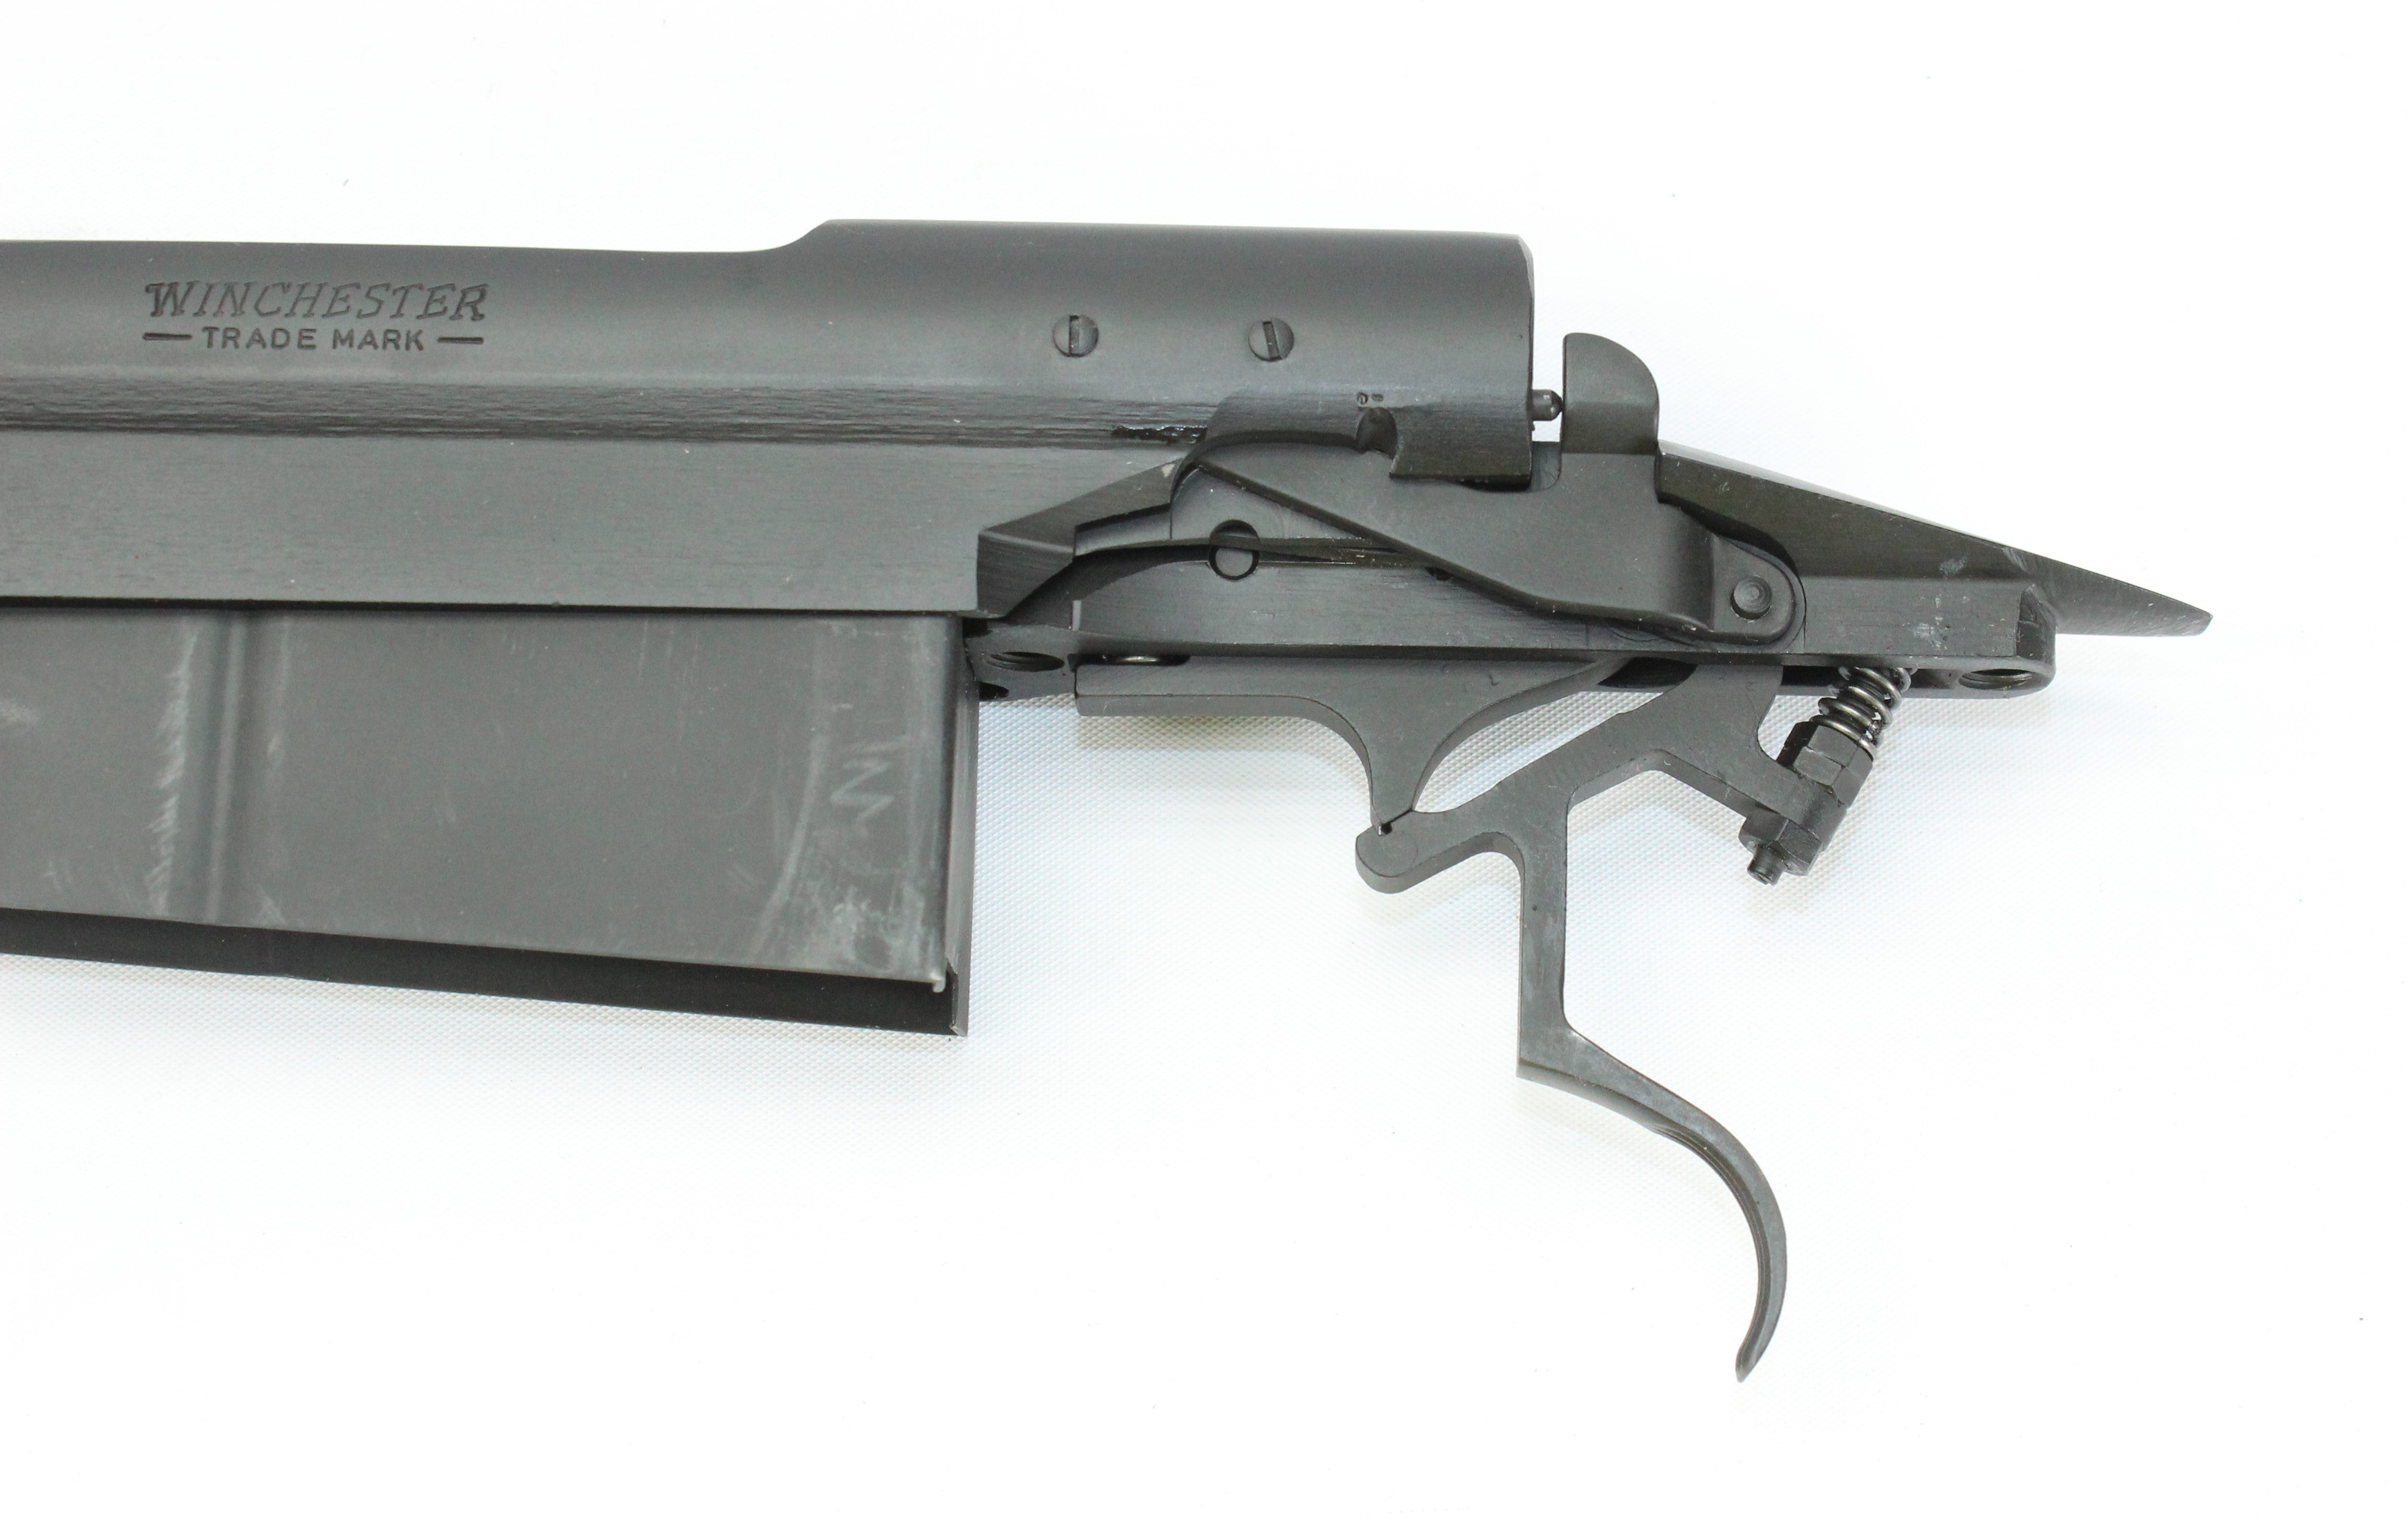 .300 H&H Magnum Standard Rifle - 1962